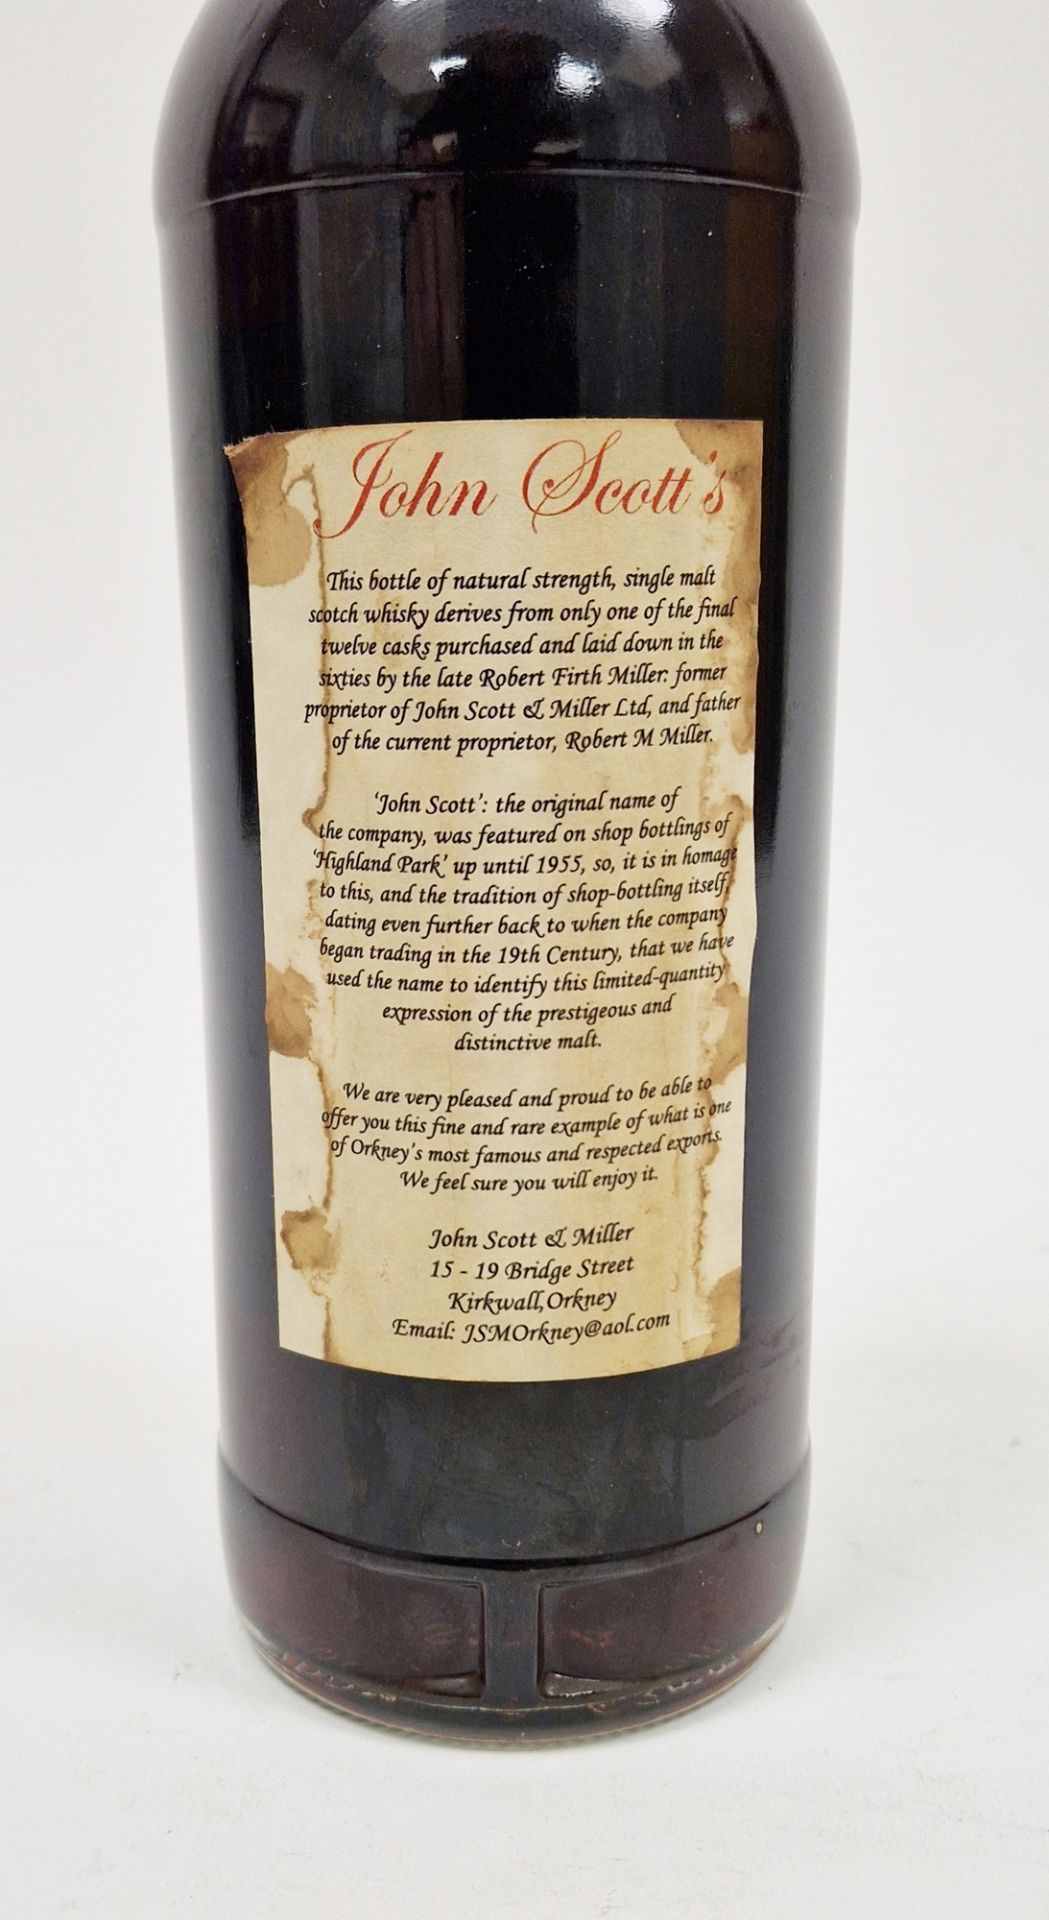 Highland Park 1965 37 year old single malt Scotch whisky, bottled in 2003 by John Scott's, bottle - Image 2 of 4